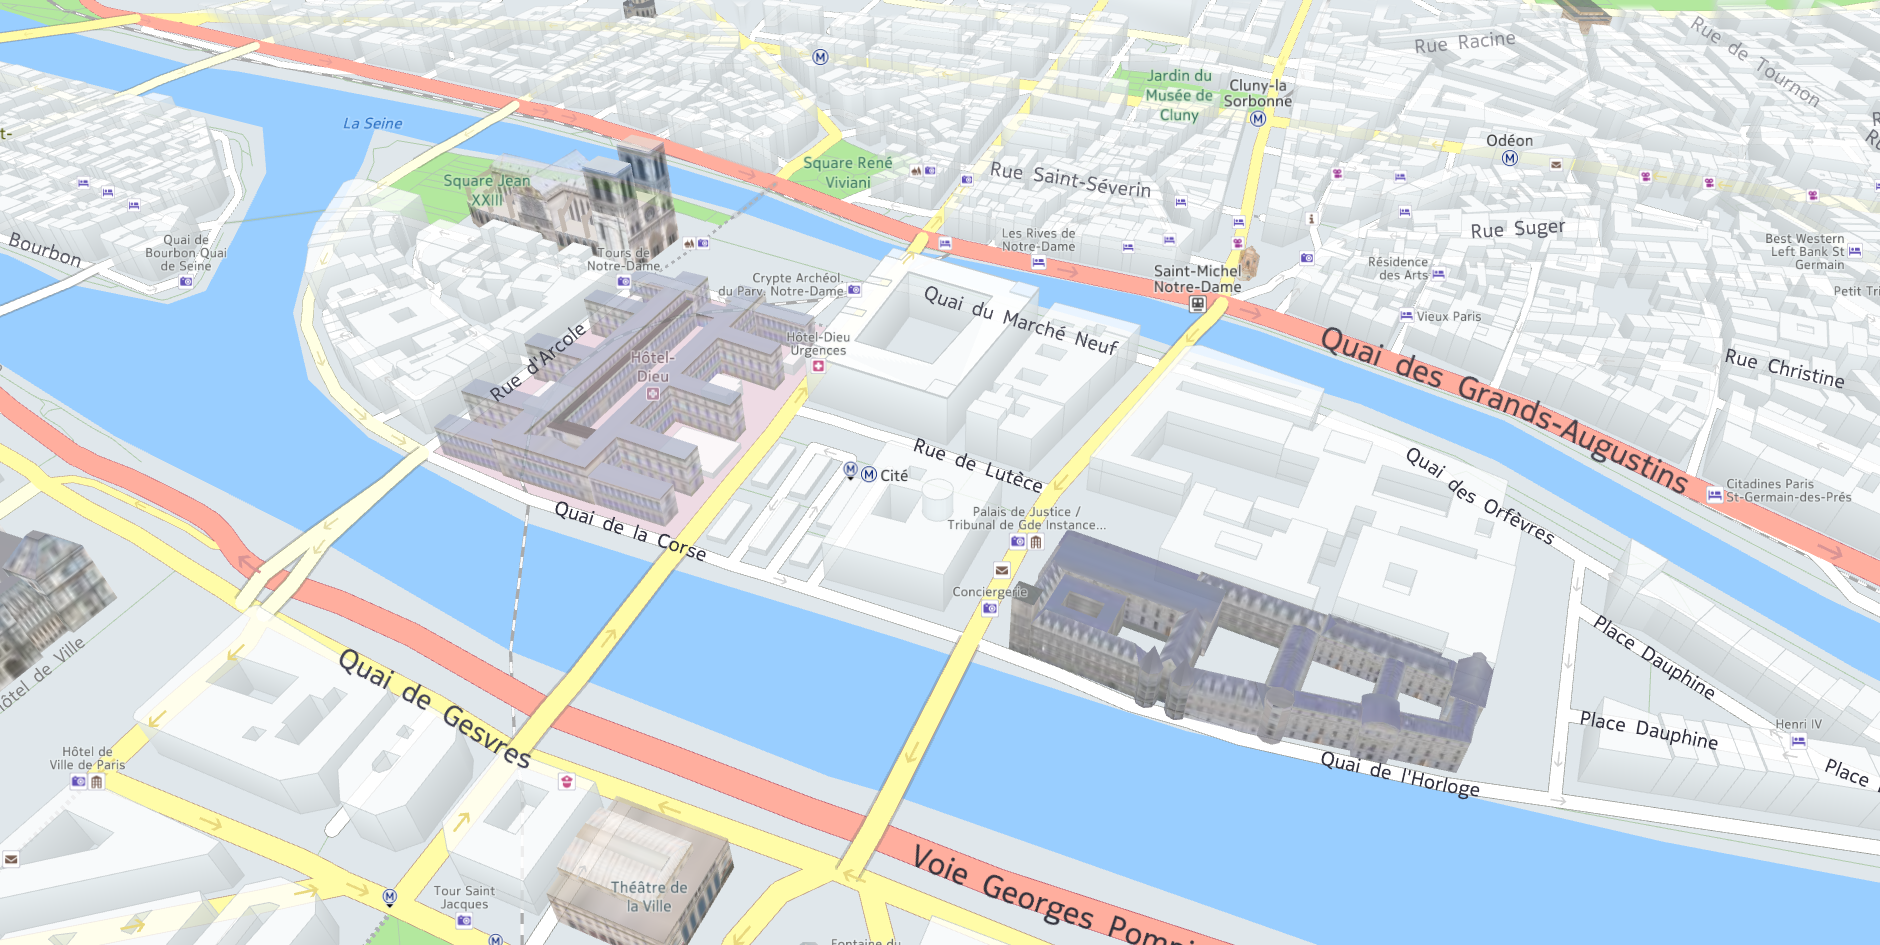 Review: HERE WeGo Maps from Nokia (Alternative to Google Maps)